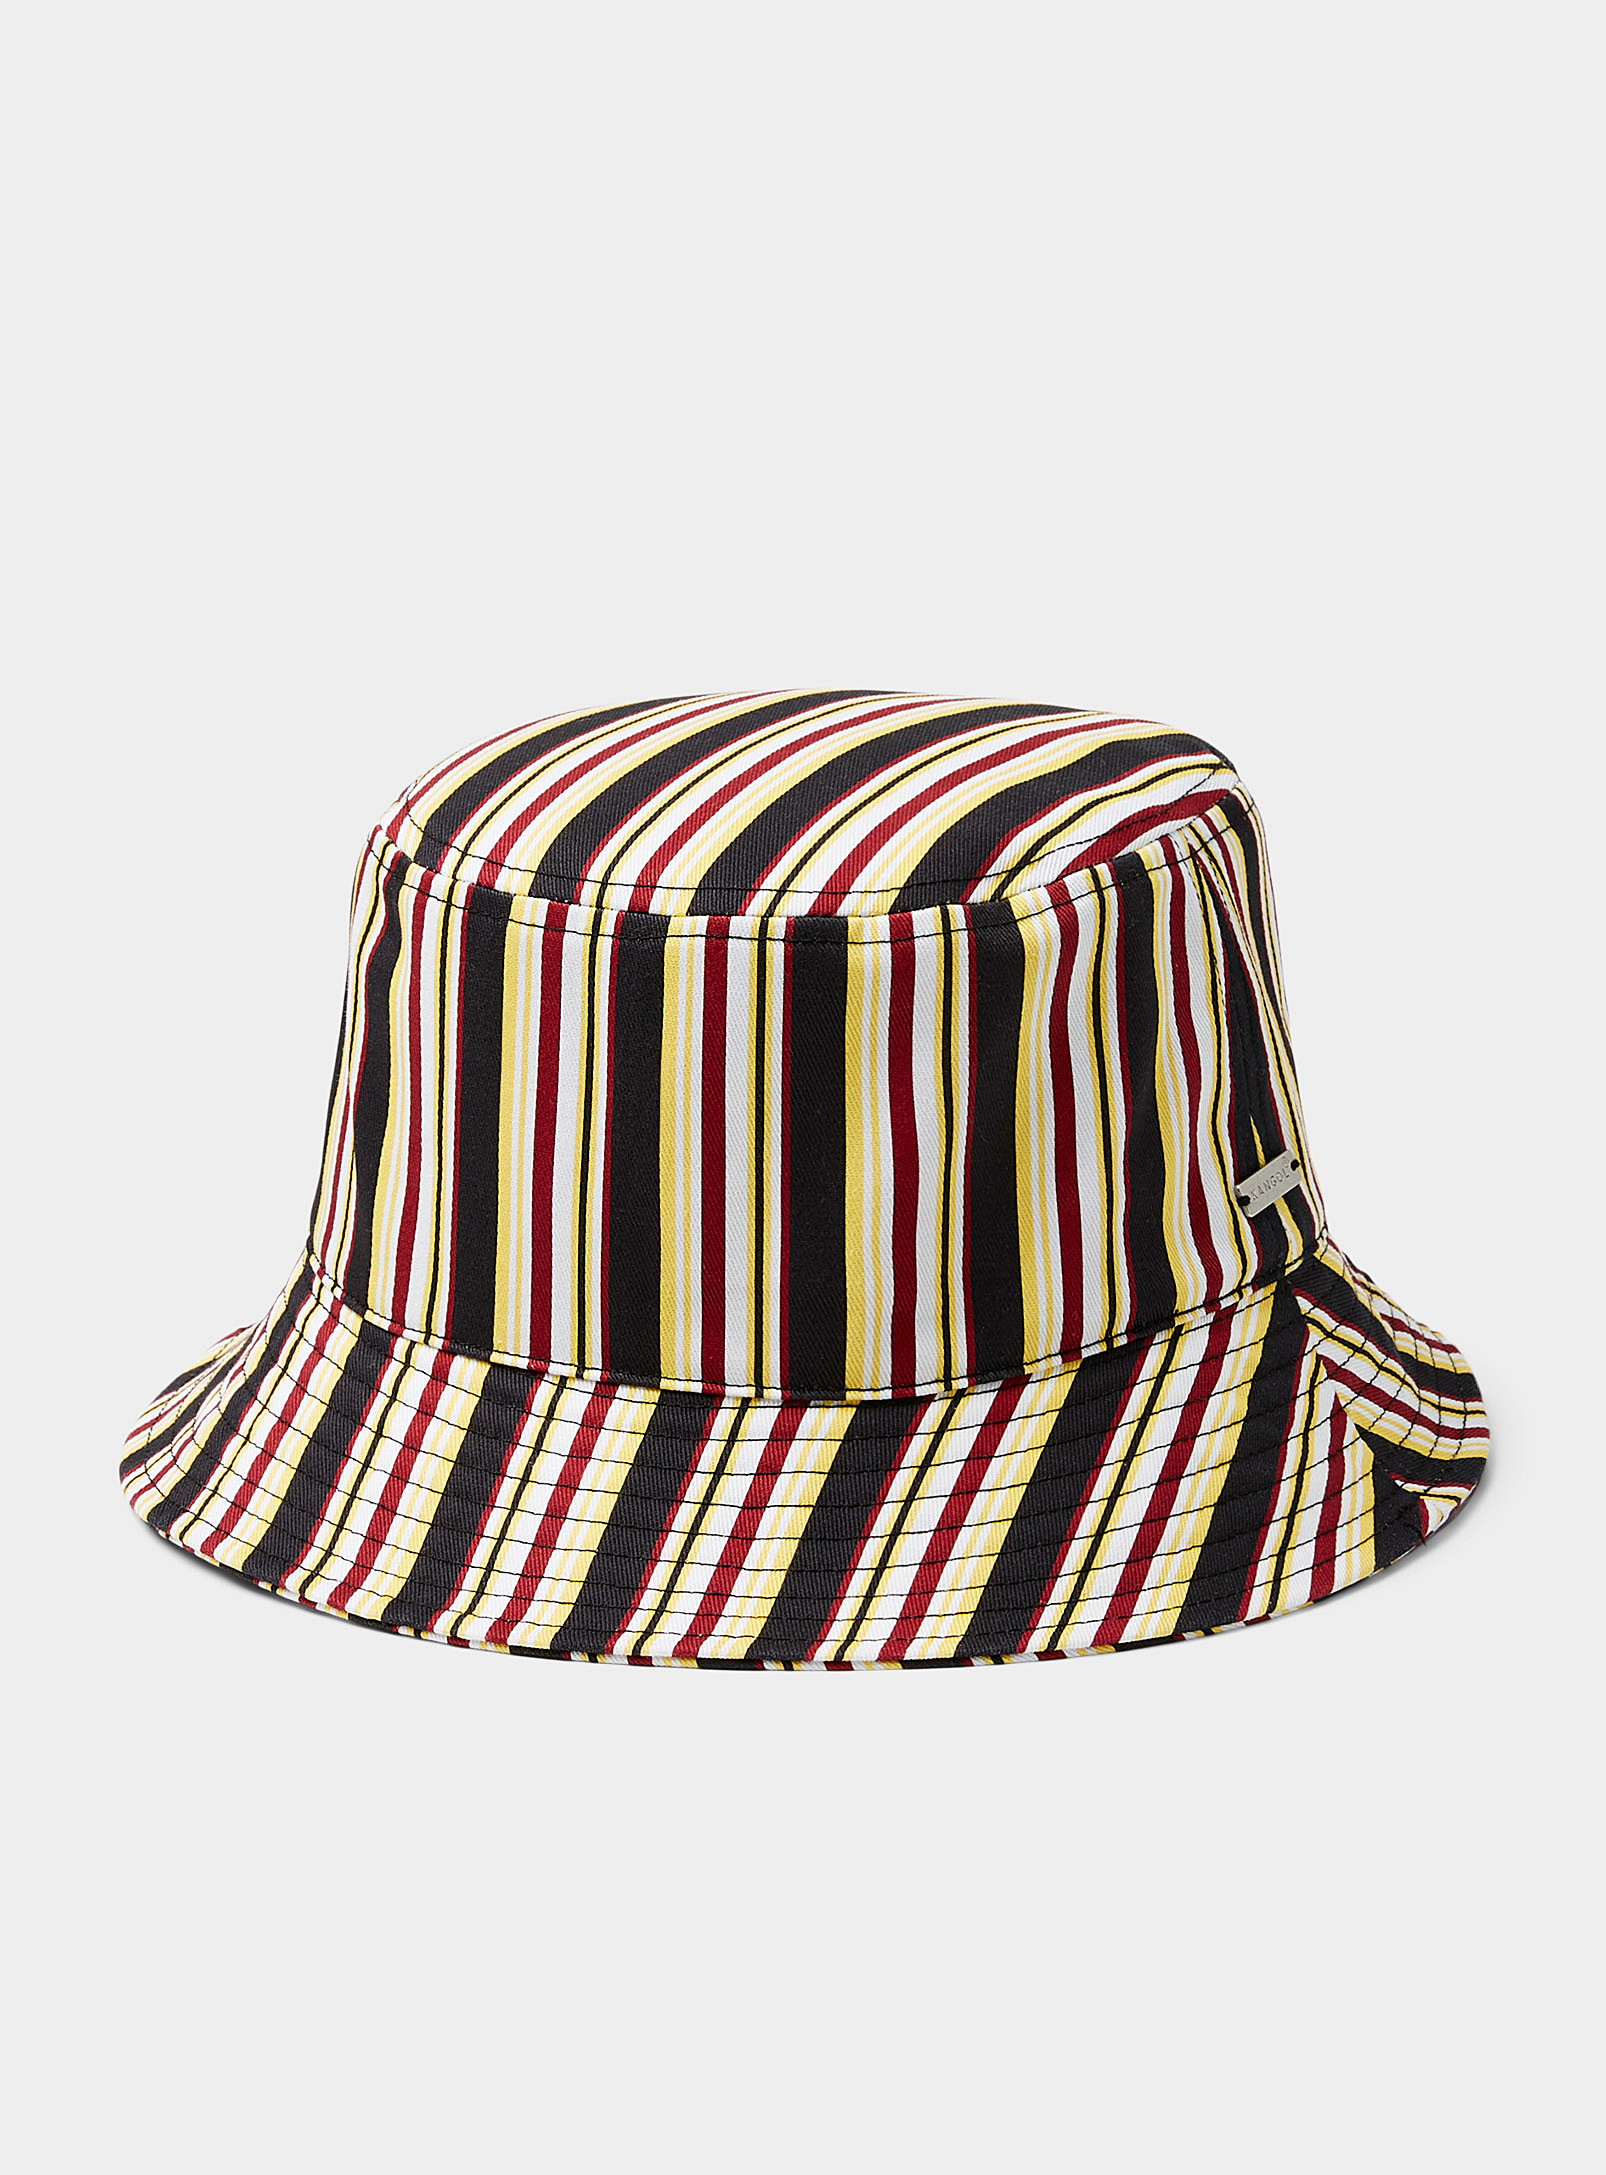 Kangol - Men's Retro-stripe bucket hat